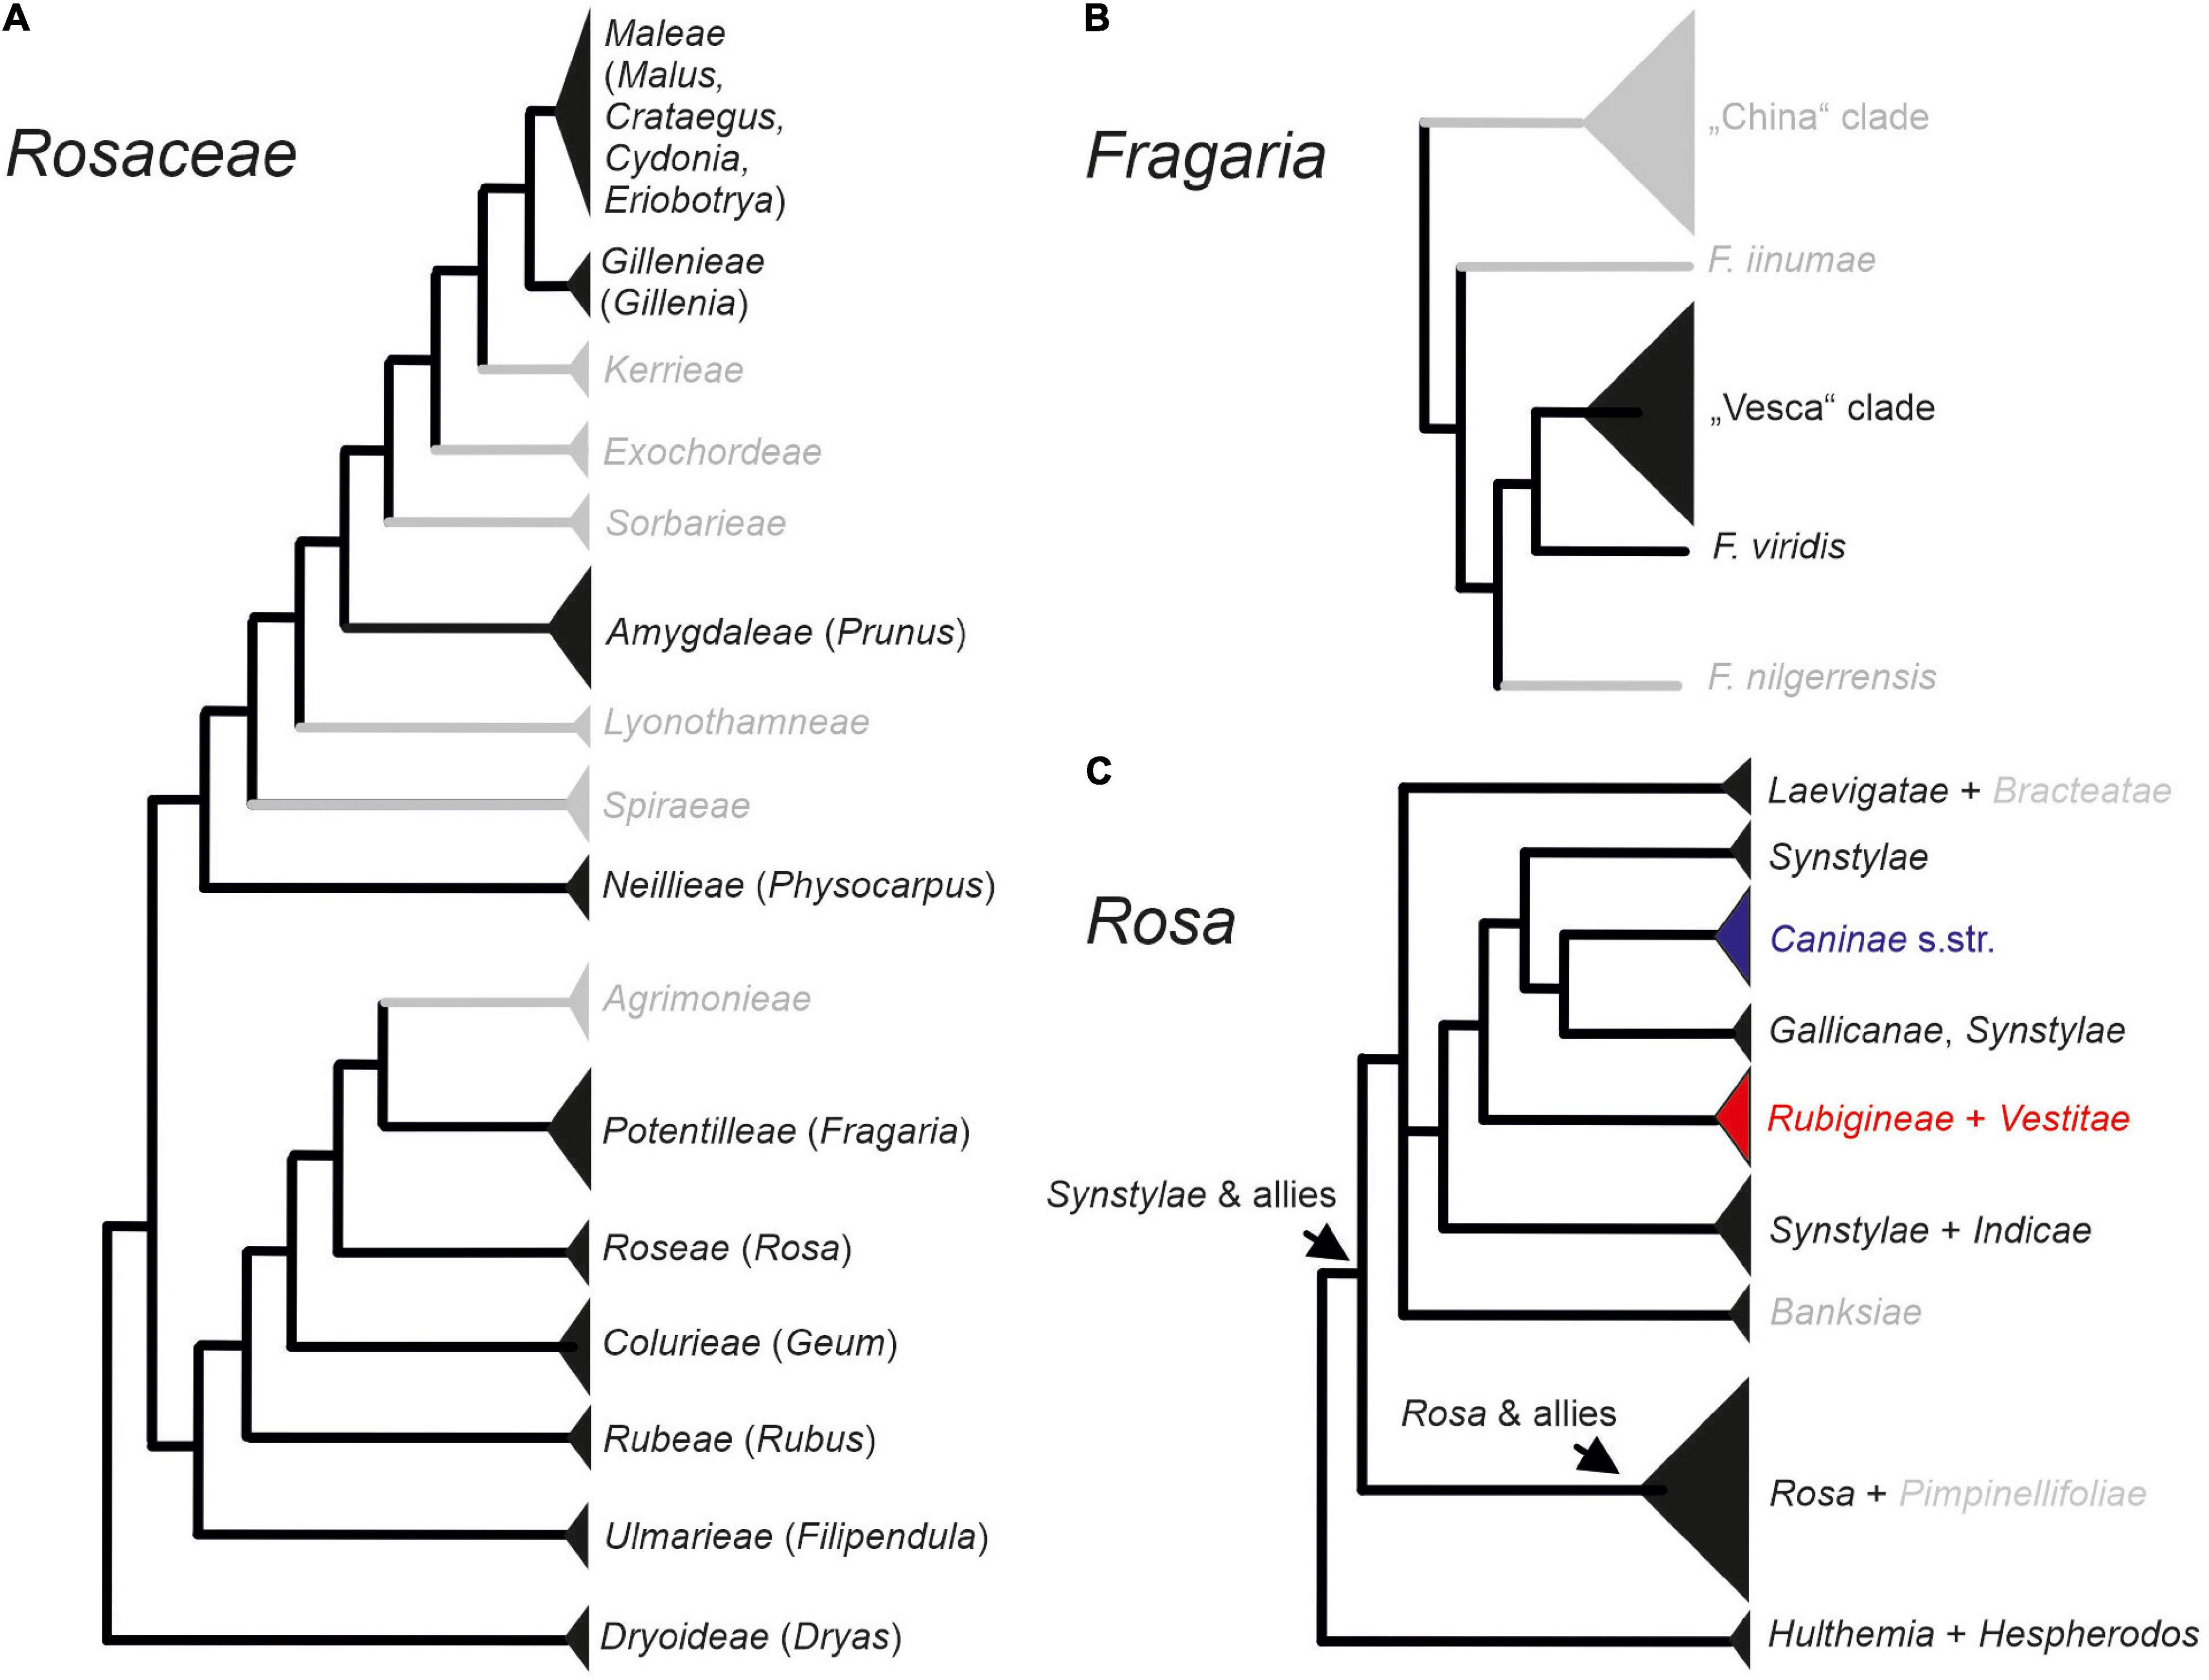 Inter- and intraspecies comparison of phylogenetic fingerprints